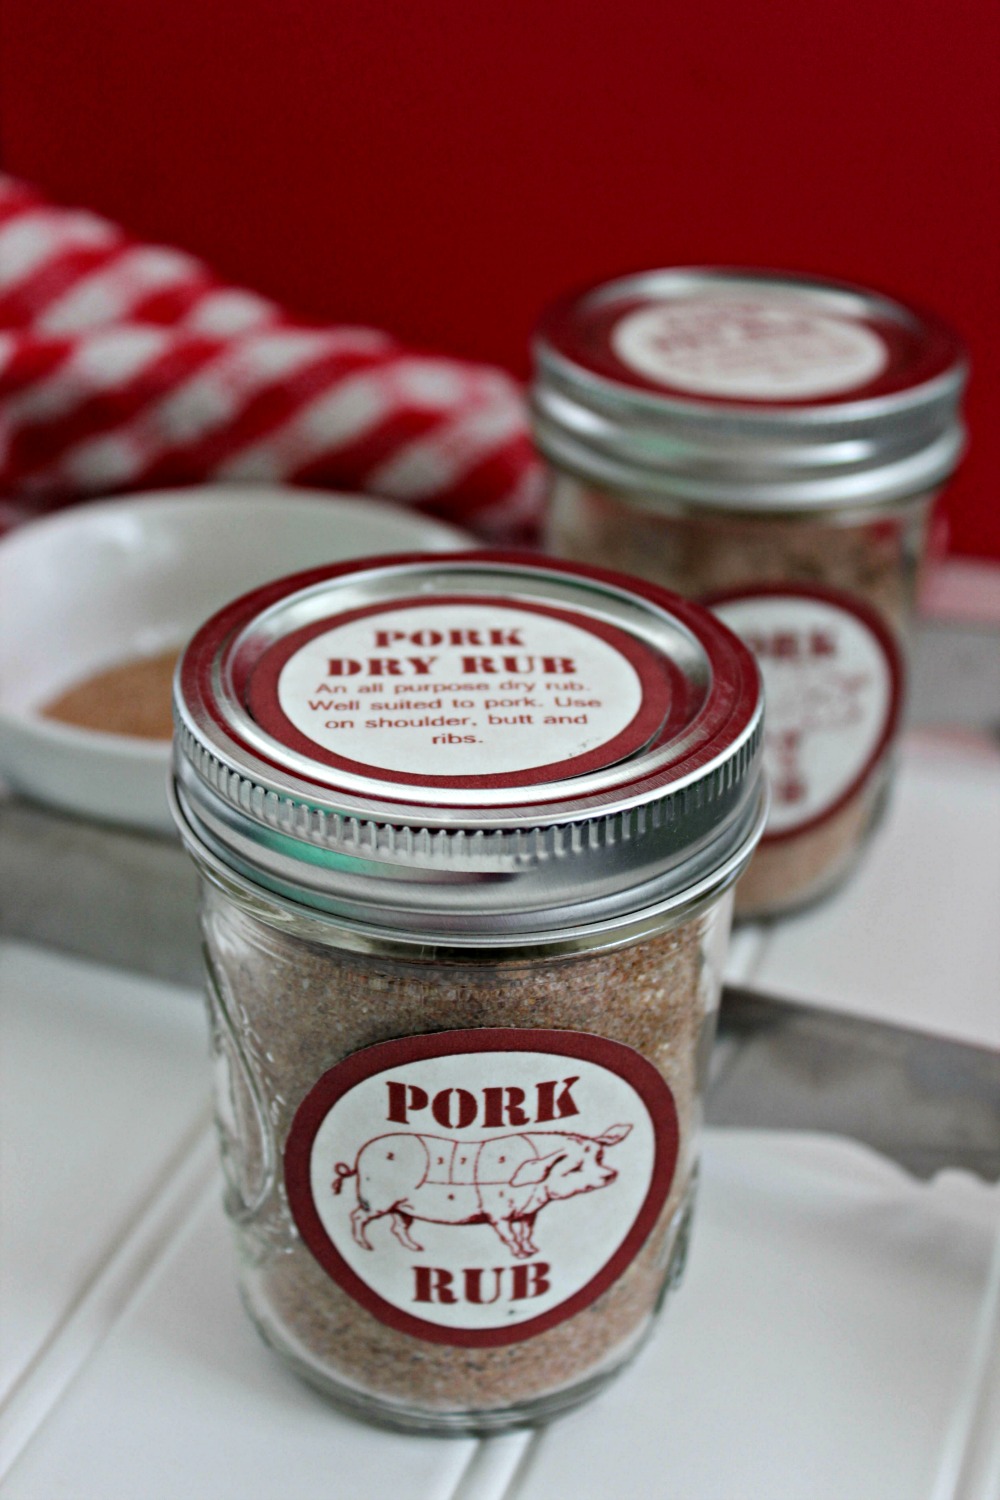 Pork Dry Rub Recipe with Printable Labels